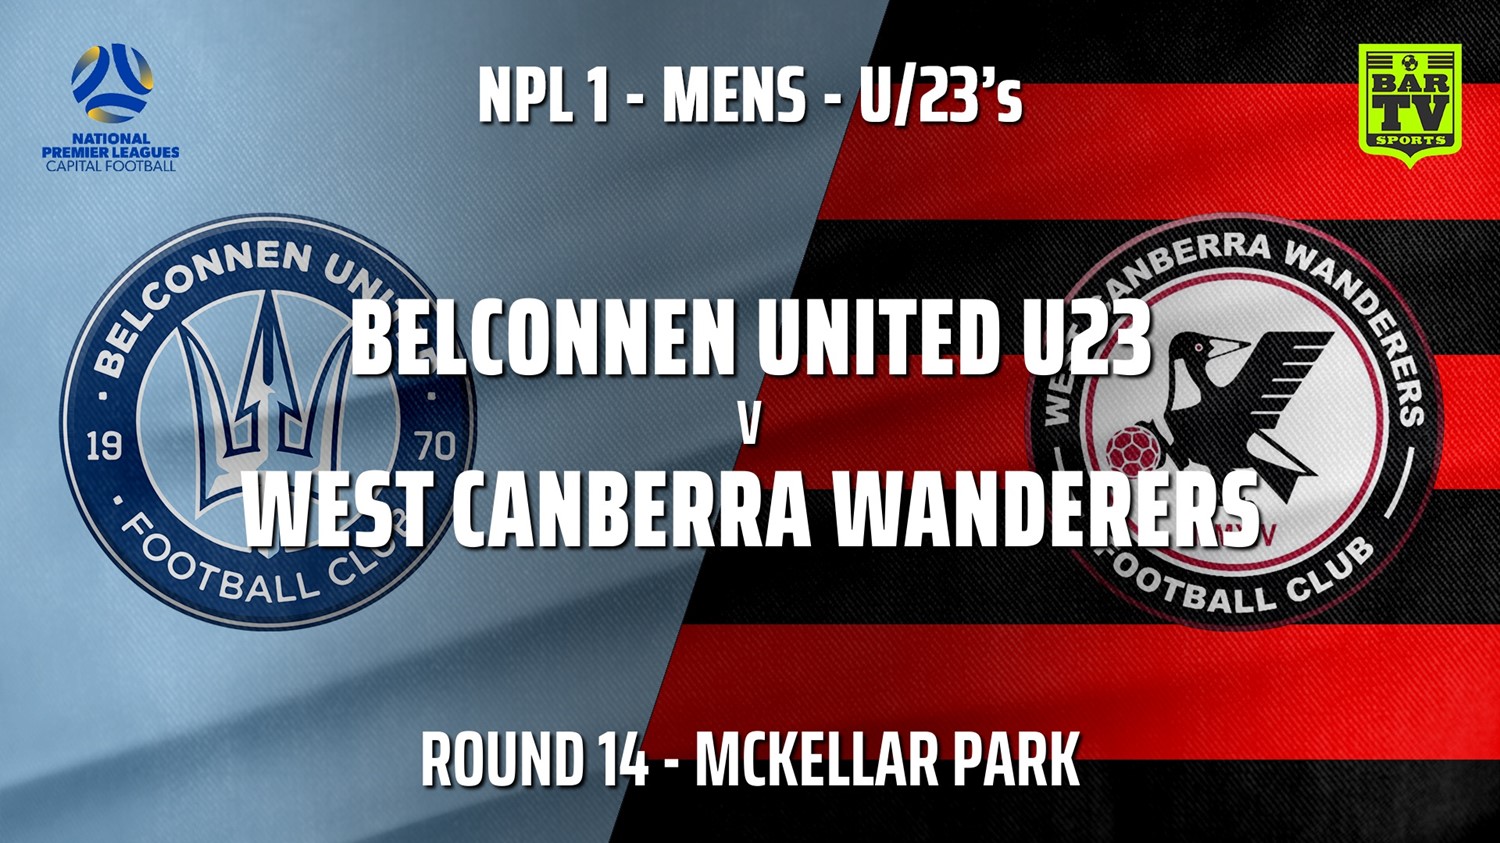 210717-Capital NPL U23 Round 14 - Belconnen United U23 v West Canberra Wanderers U23s Slate Image